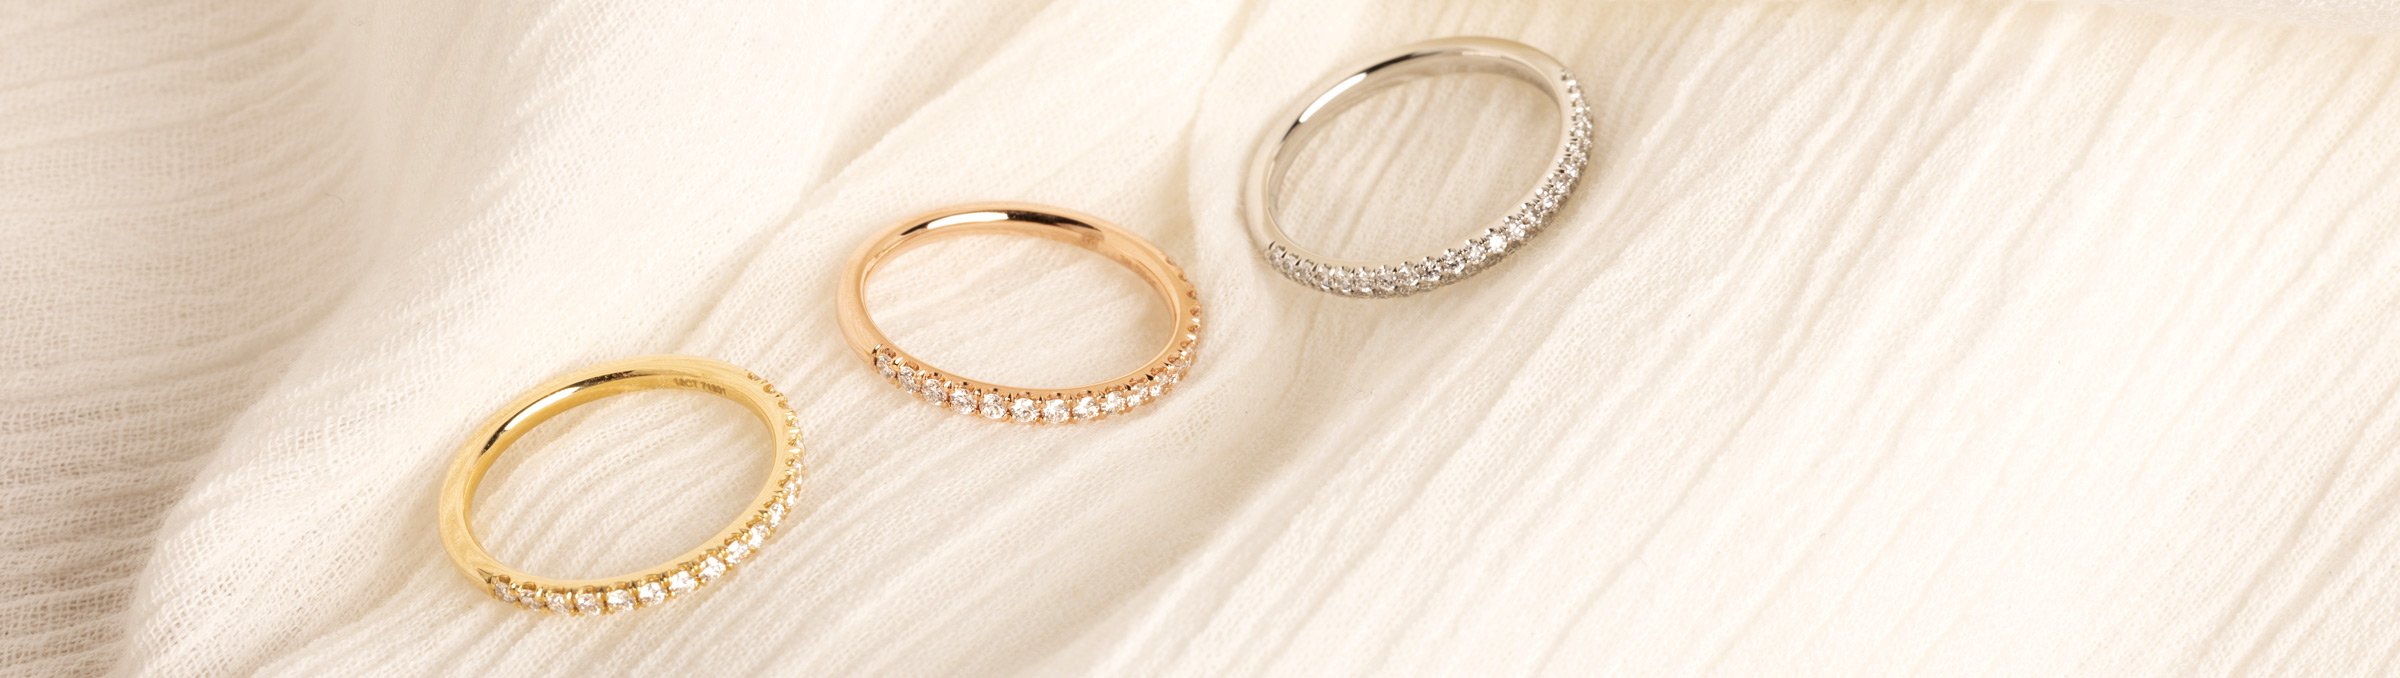 Popular Women's Wedding Ring Styles Guide | Diamond Exchange